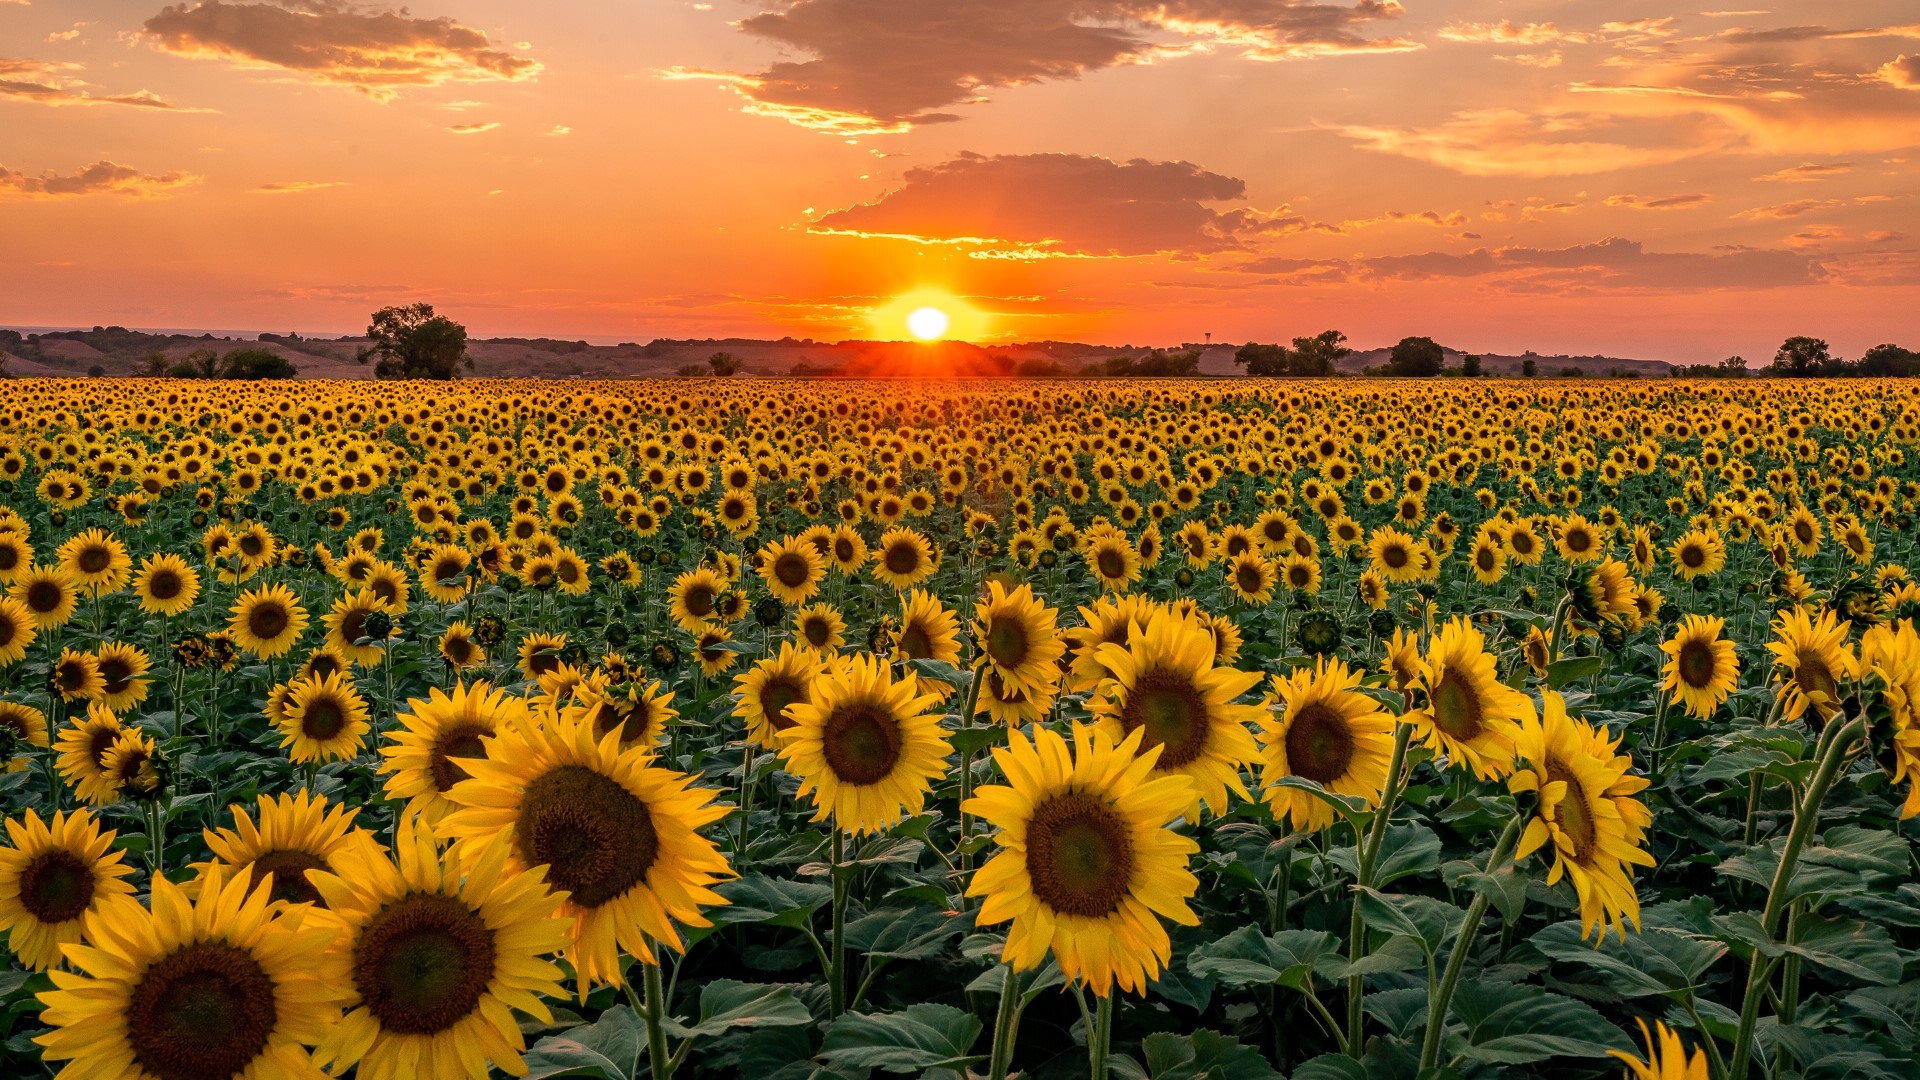 Incredible sunflower photos from across Denver and Colorado